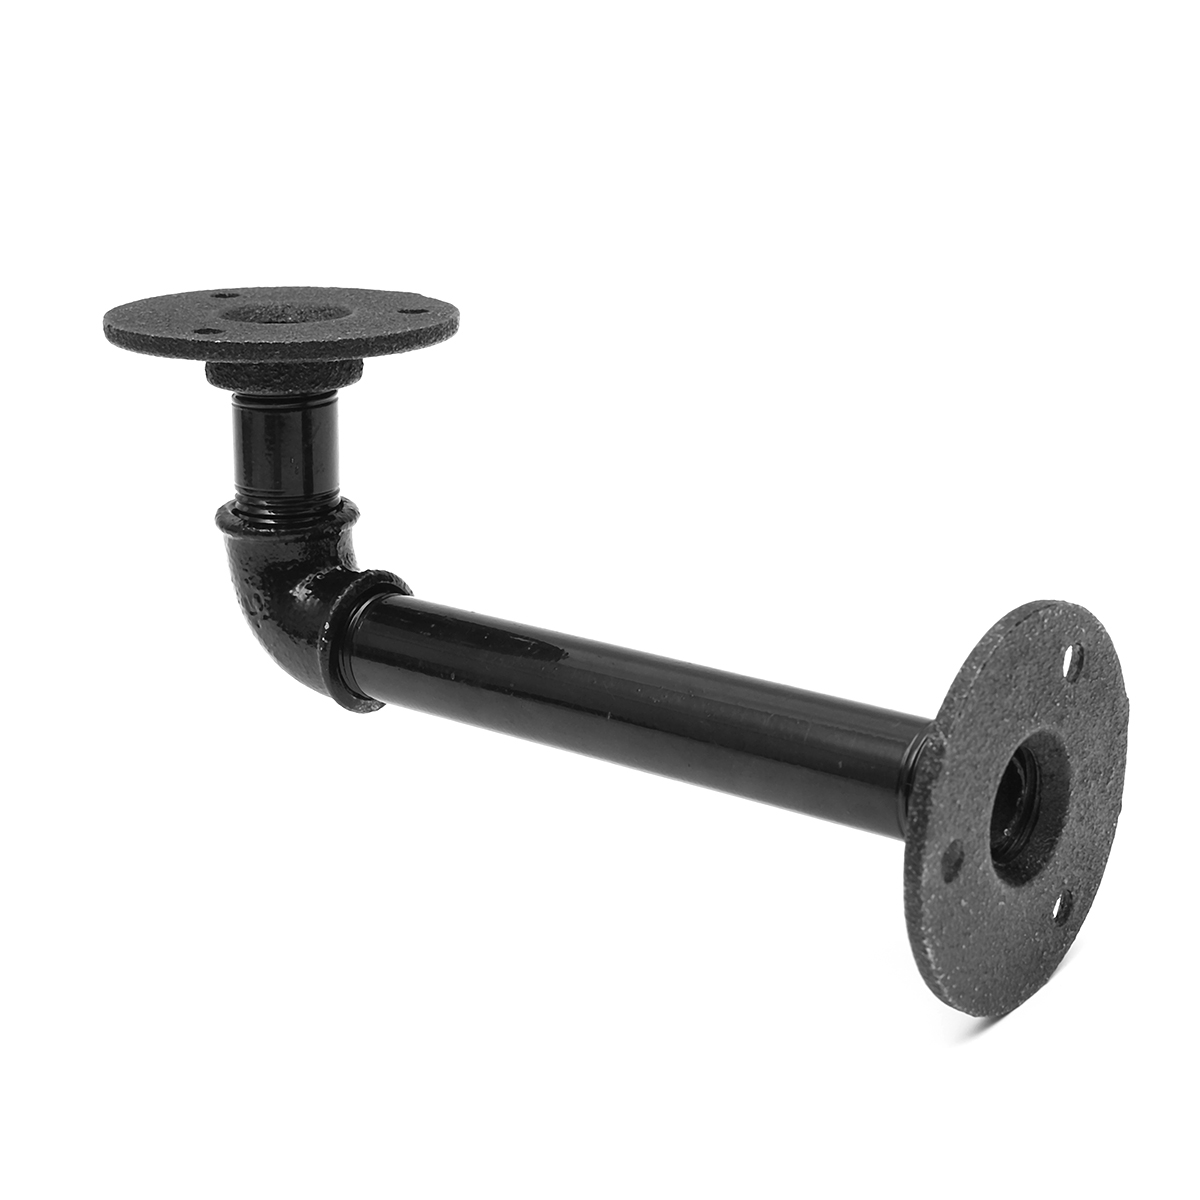 160mm-Length-Iron-Industrial-Pipe-Shelf-Vintage-Black-Bracket-Holder-Home-Decor-1183308-5